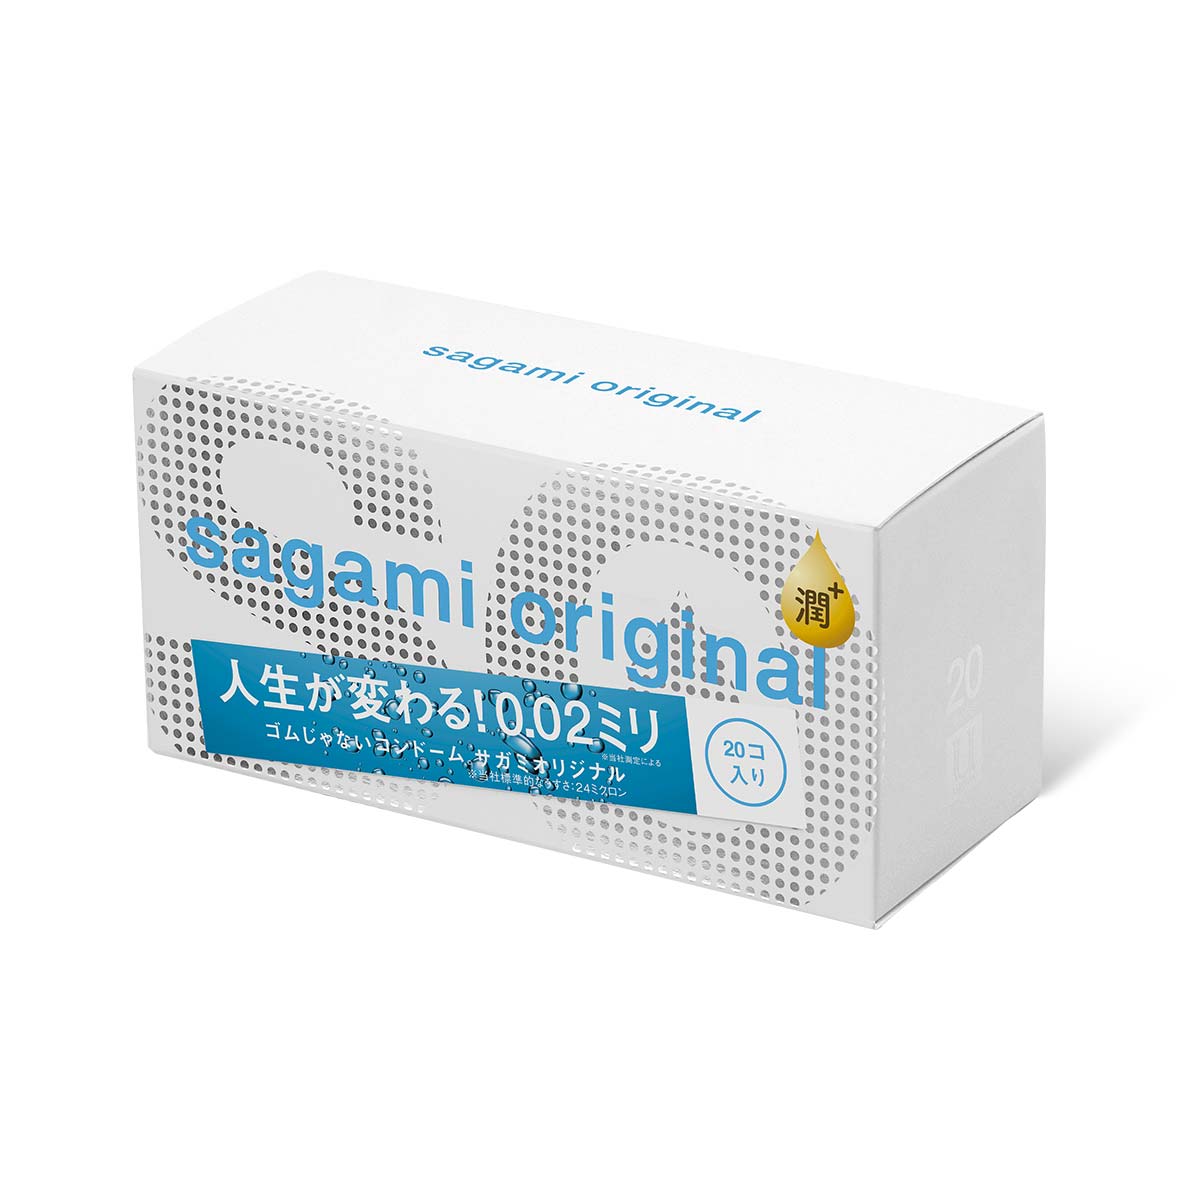 Sagami Original 0.02 Extra Lubricated 20's Pack PU Condom (Defective Packaging)-p_1